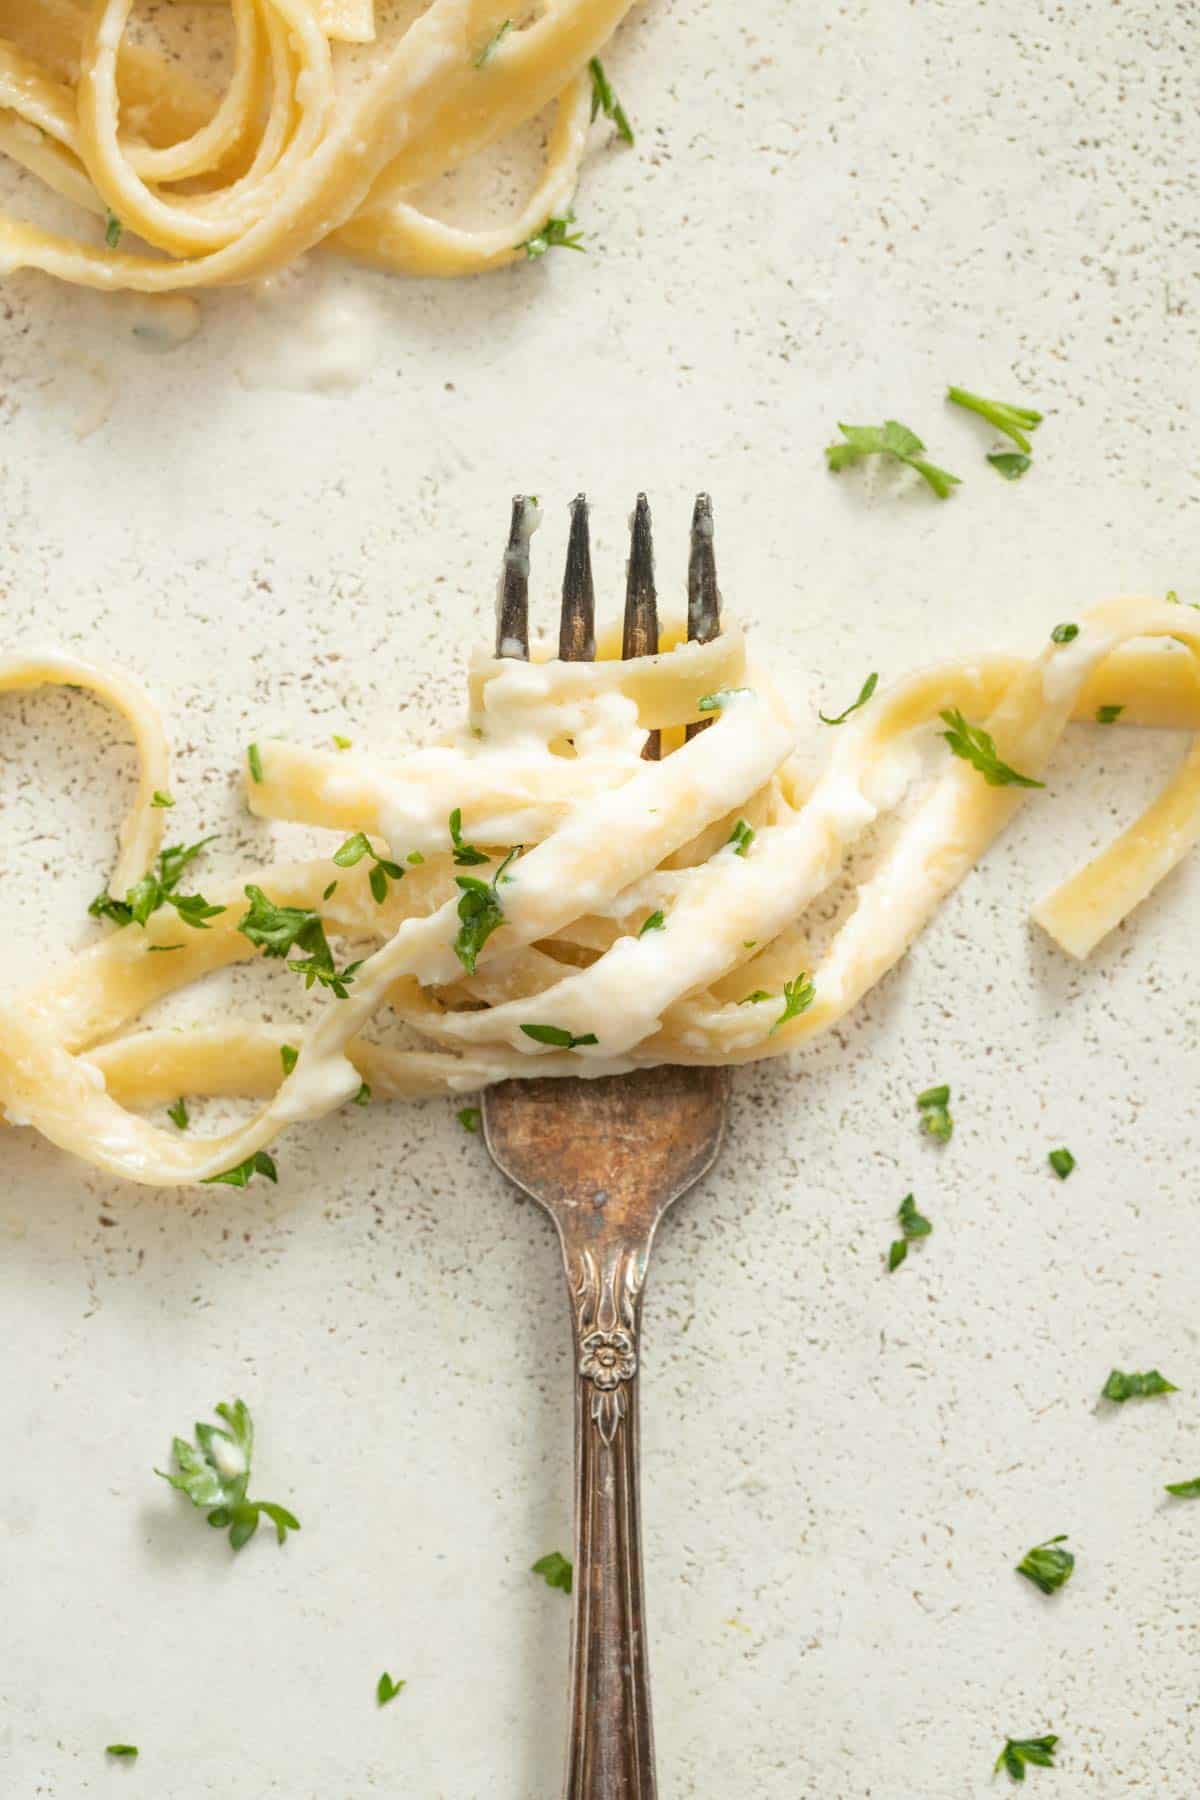 Creamy pasta wrapped around fork tines.